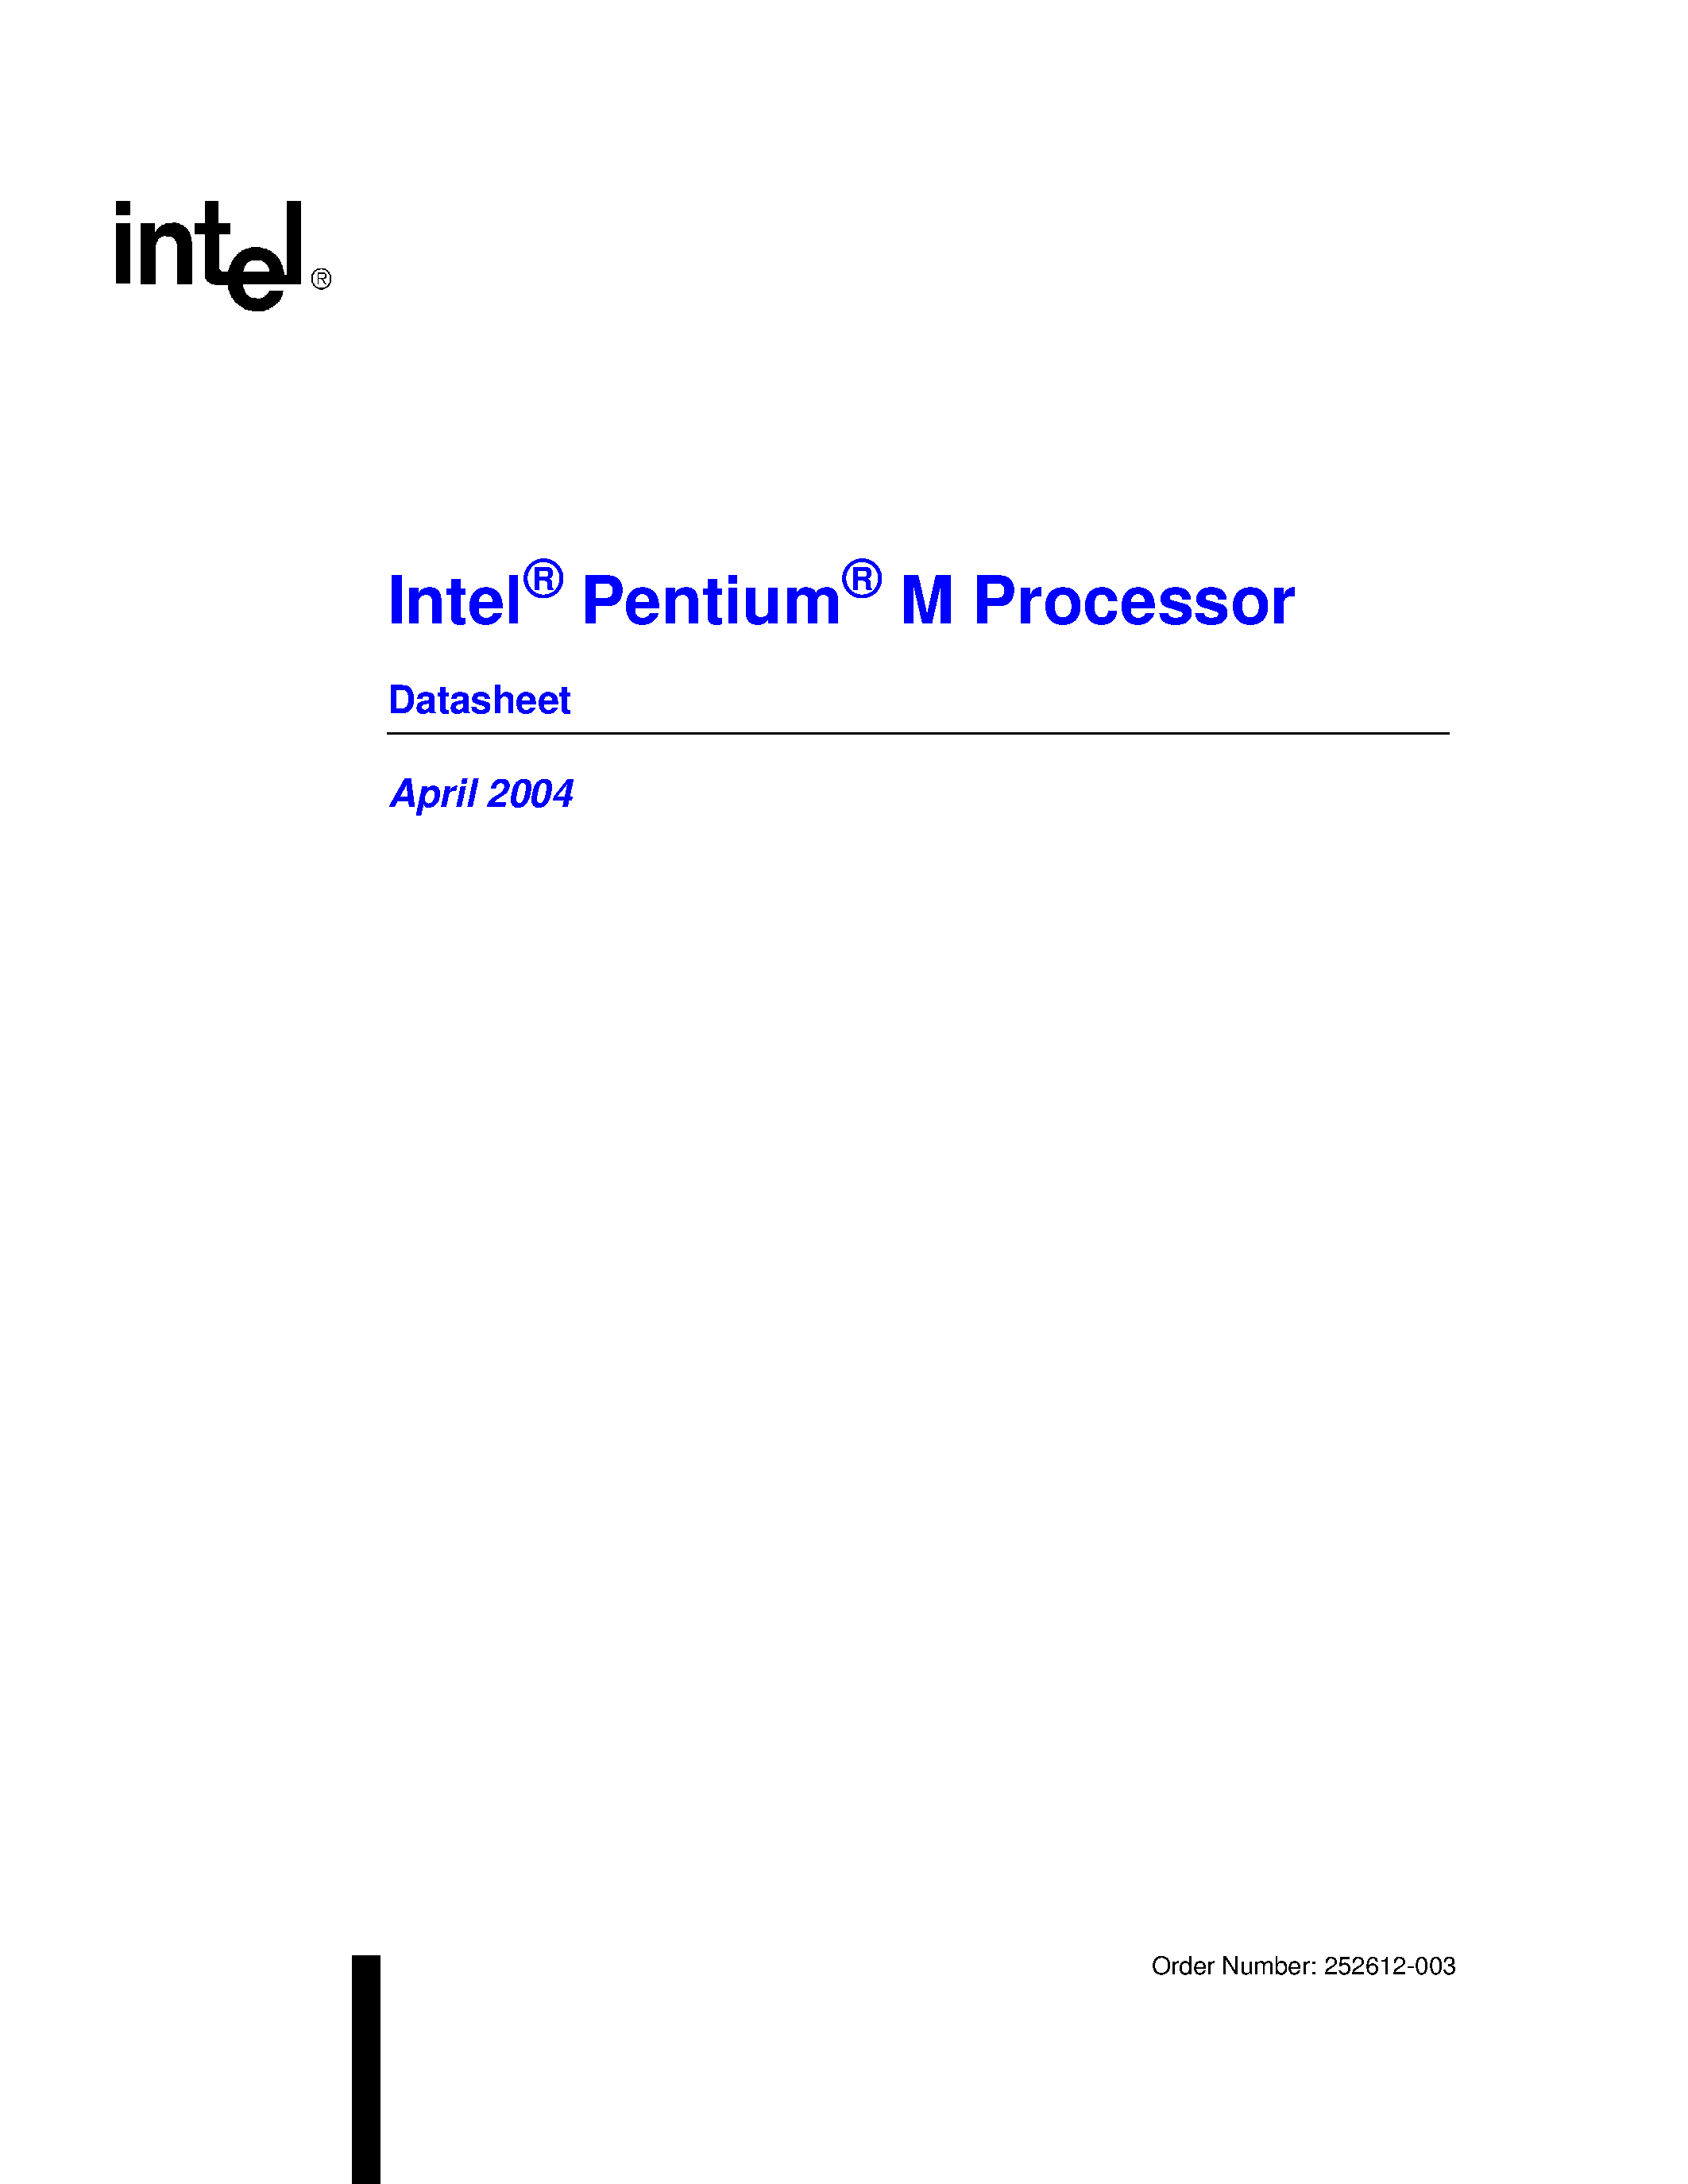 Даташит RJ80535 - Pentium M Processor страница 1